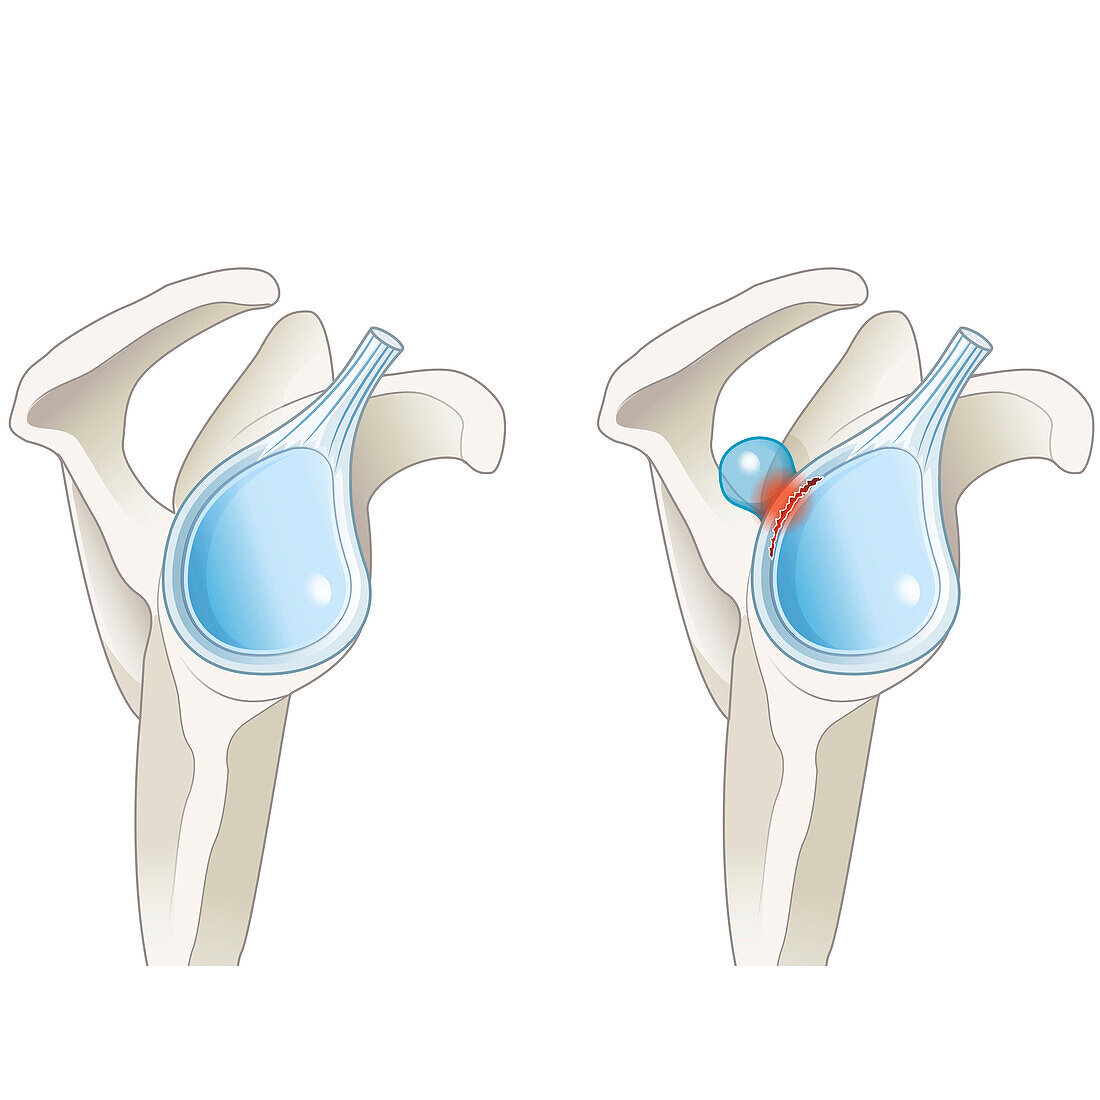 SLAP lesion paralabral cyst in the shoulder, illustration